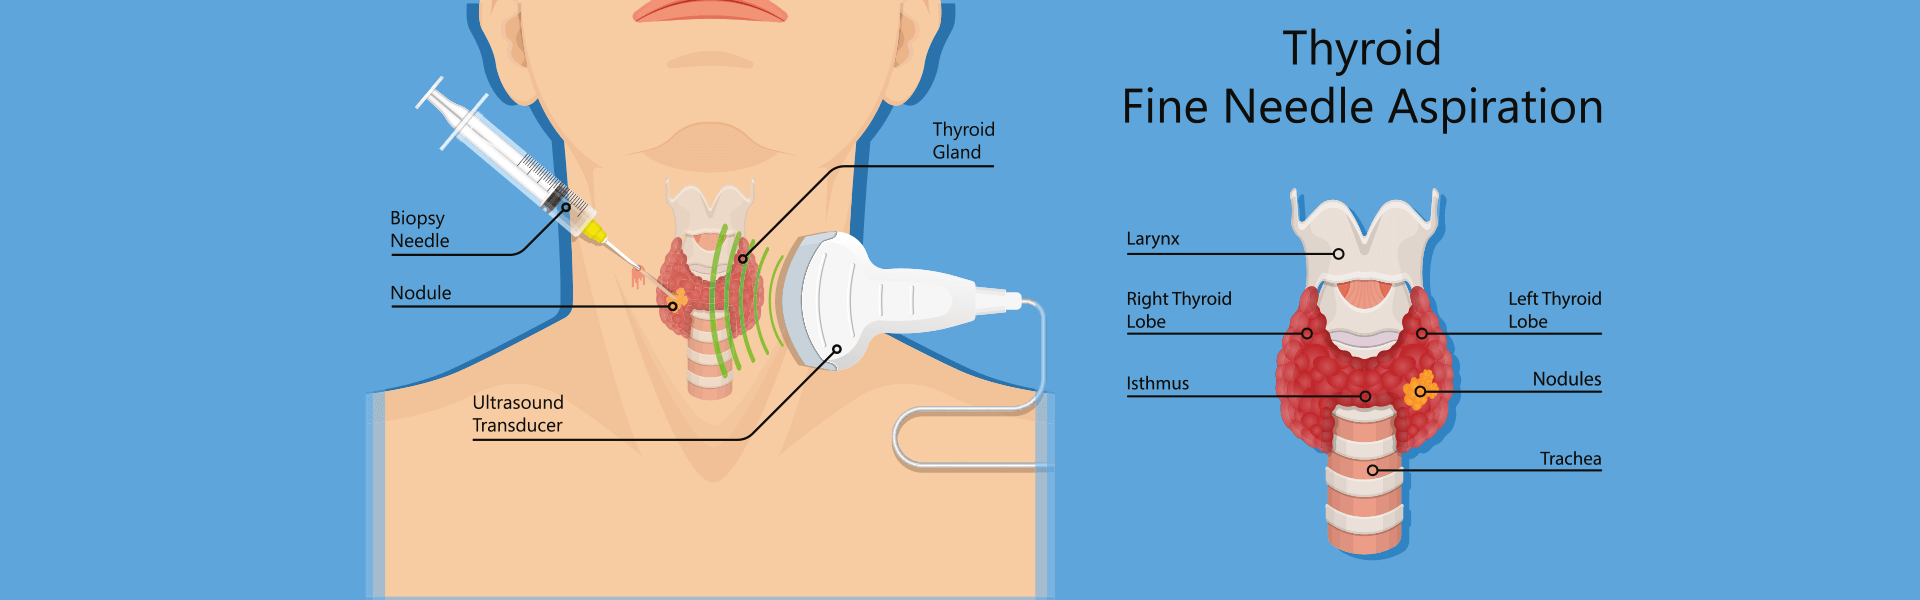 FNAC Procedure | Fine Needle Aspiration Cytology Test in India